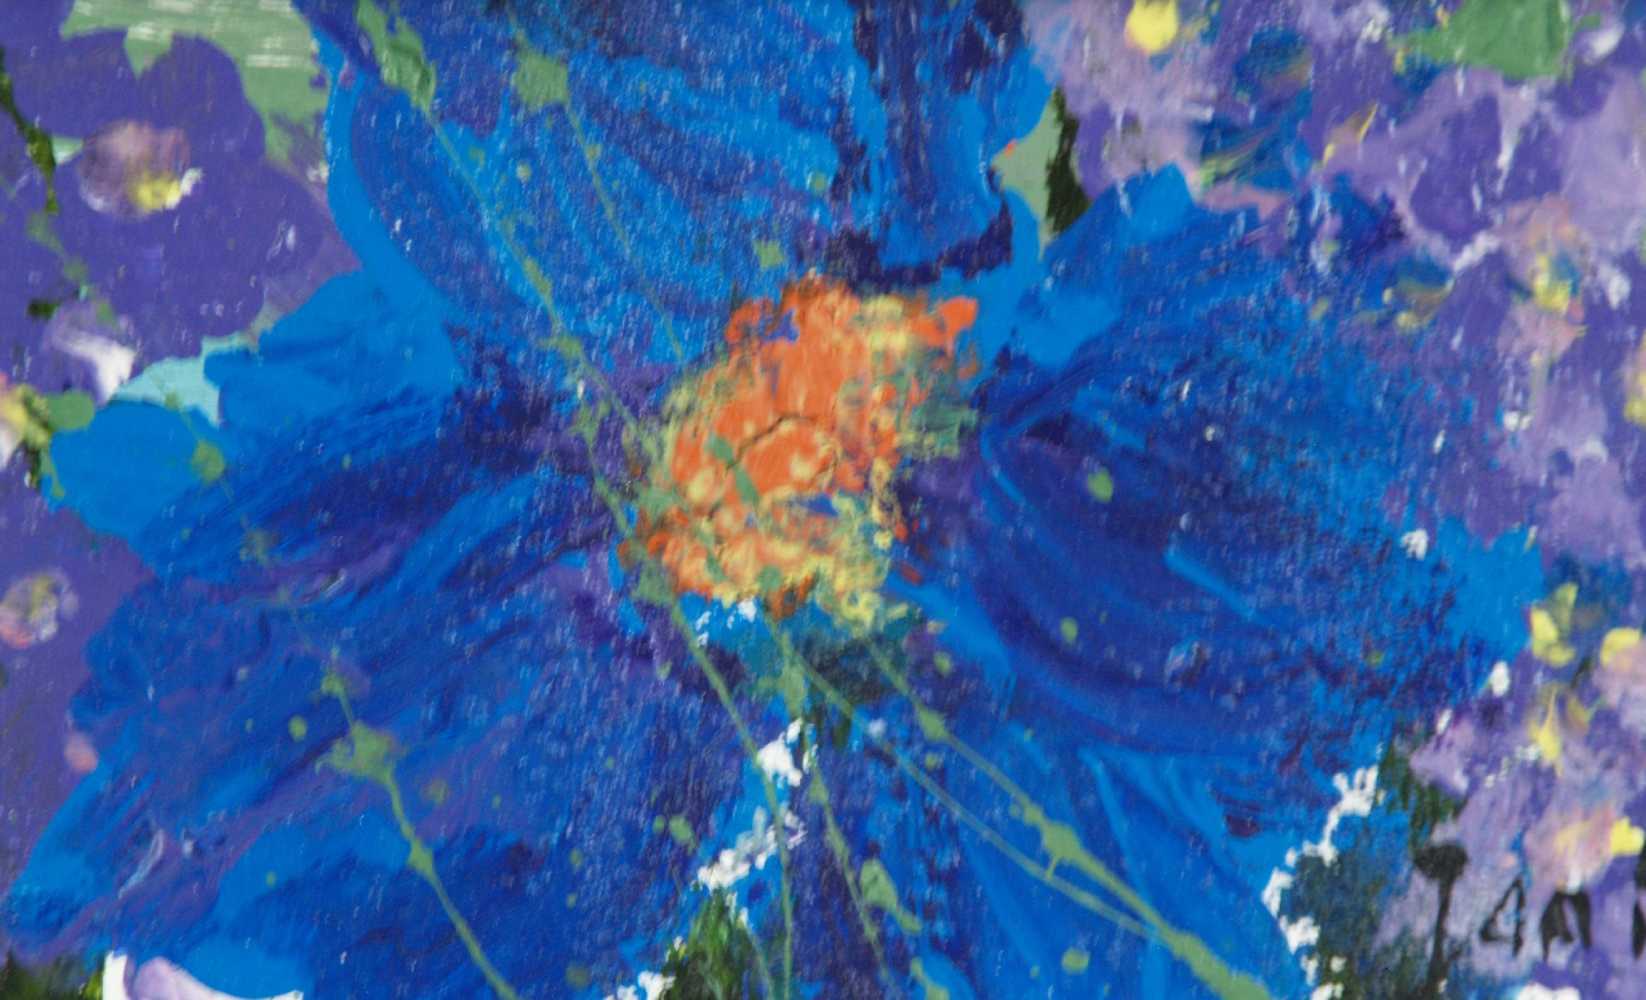 Jani - "Blaue Blüten", Acryl auf Holz, signiert, 11x22 cm, in Holzrahmung - Image 2 of 2